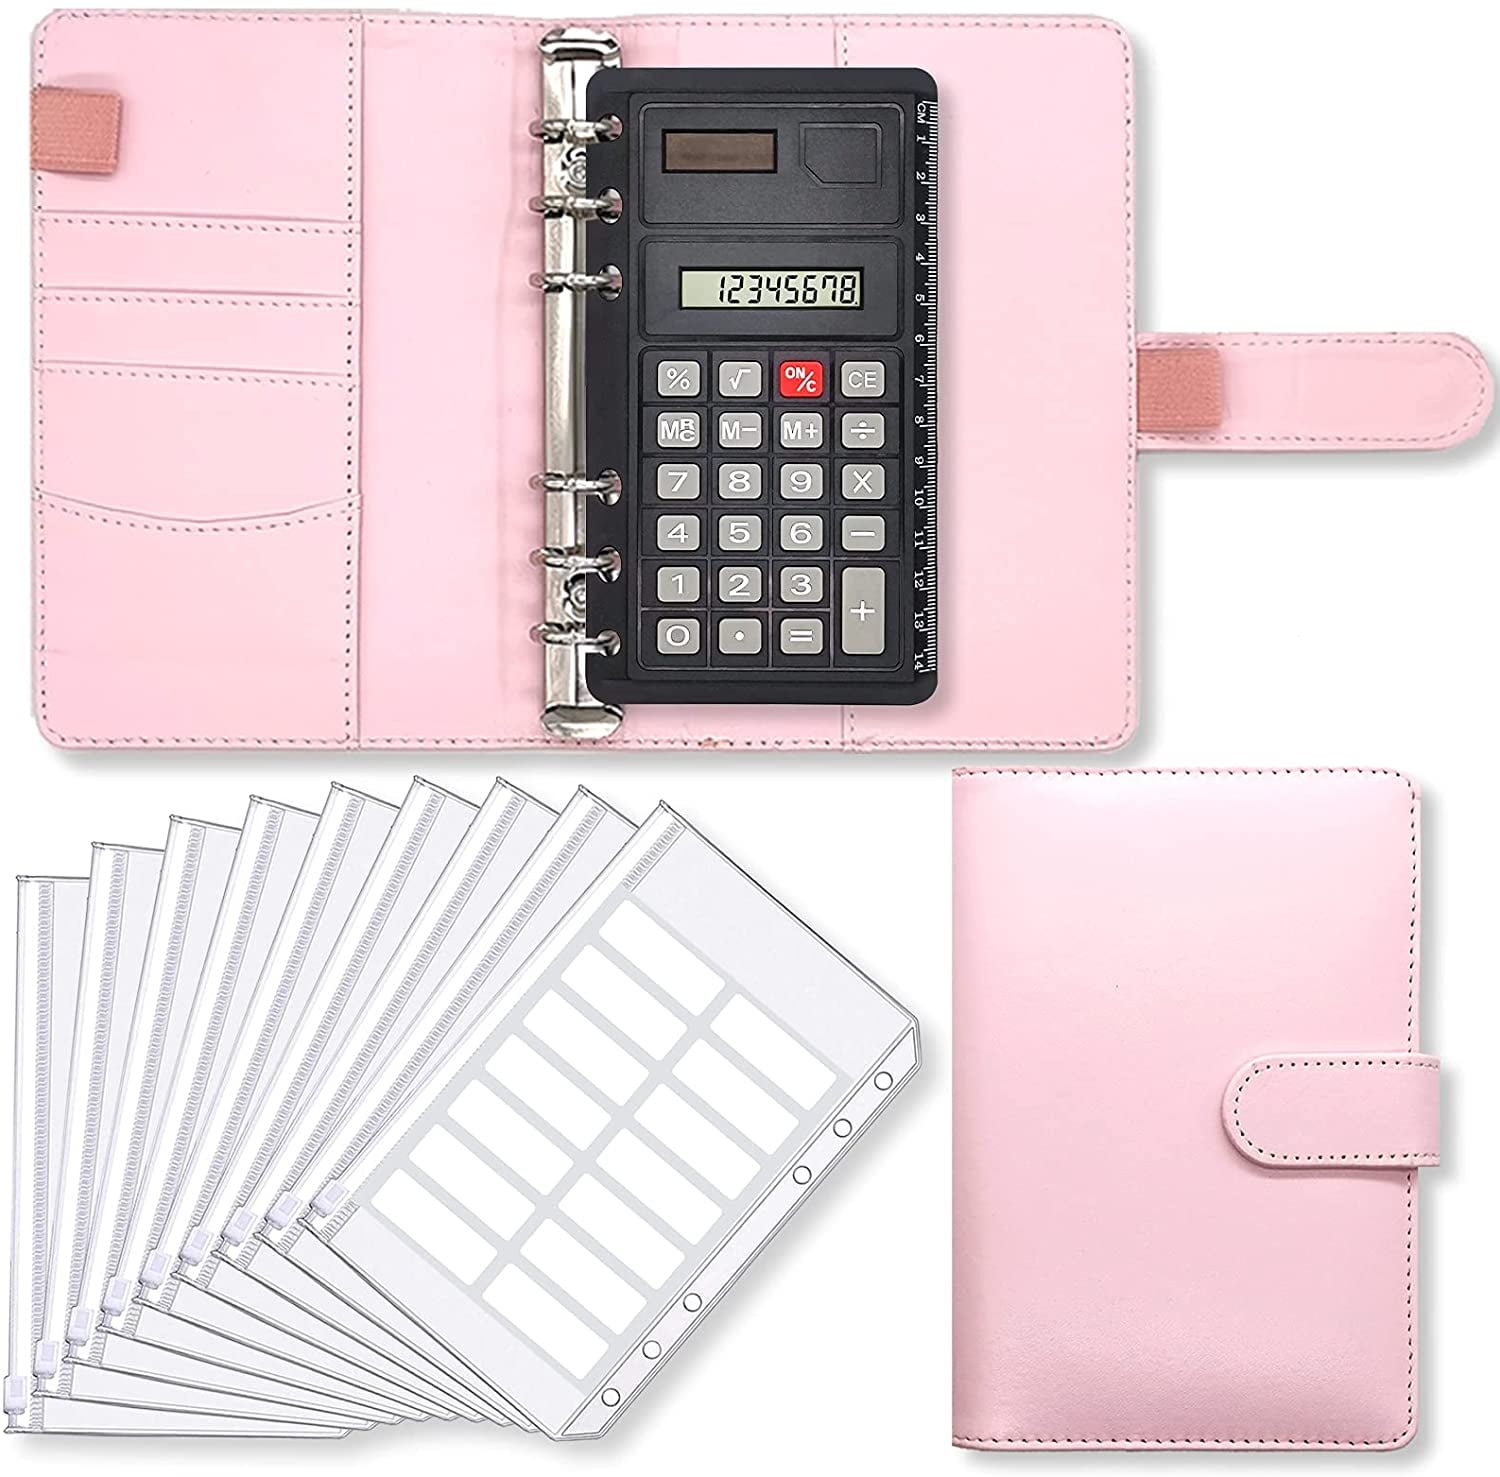 A7 Wallet, A7 Pink Binder, Budget Binder, PU Leather Budget